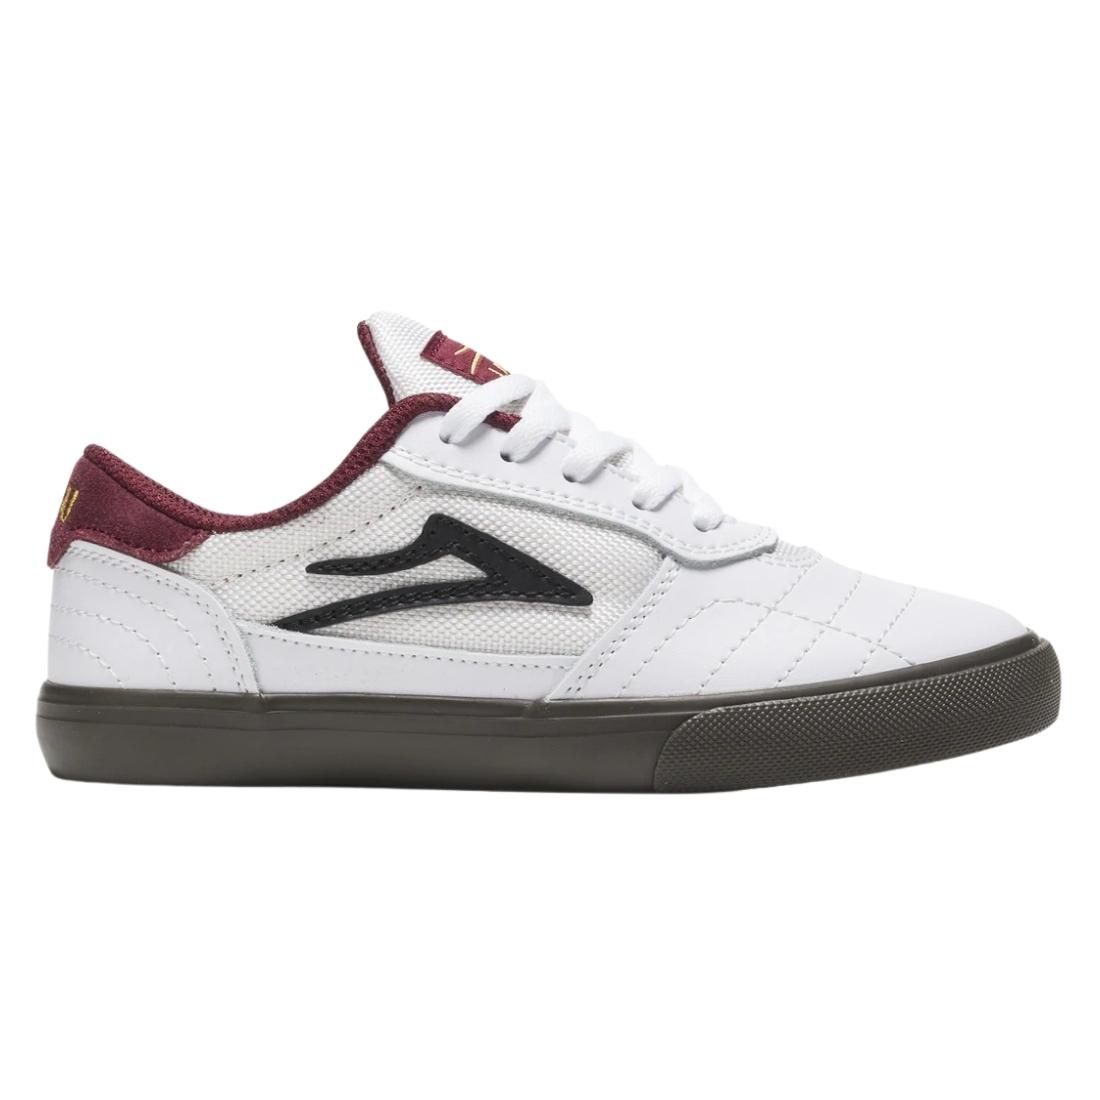 Lakai Cambridge Kids Skate Shoes - White/Gum Leather